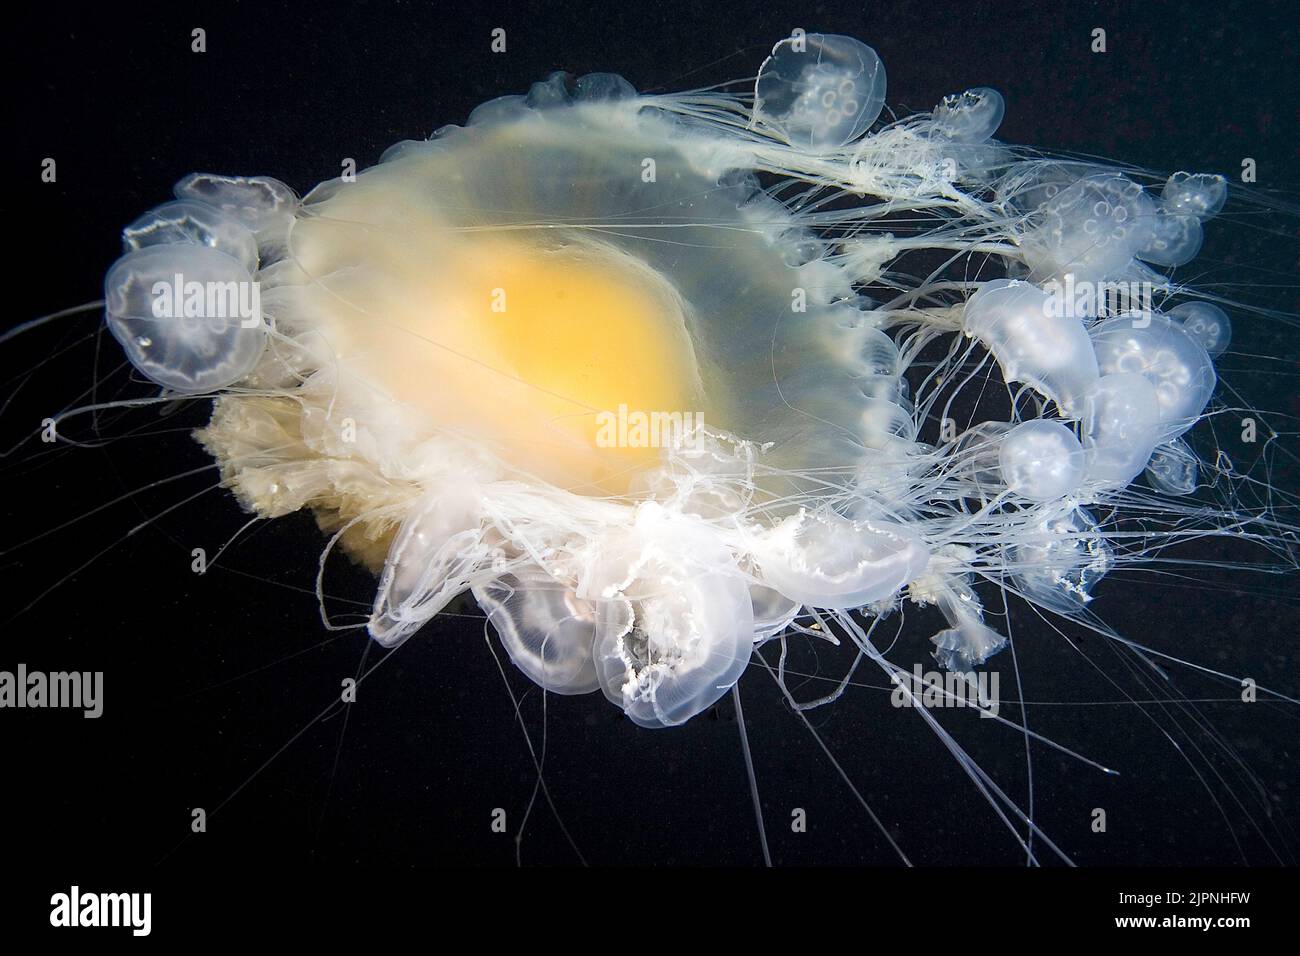 Fried Egg Jellyfish or Egg-yolk jellyfish (Phacellophora camchakana), British Columbia, Canada Stock Photo